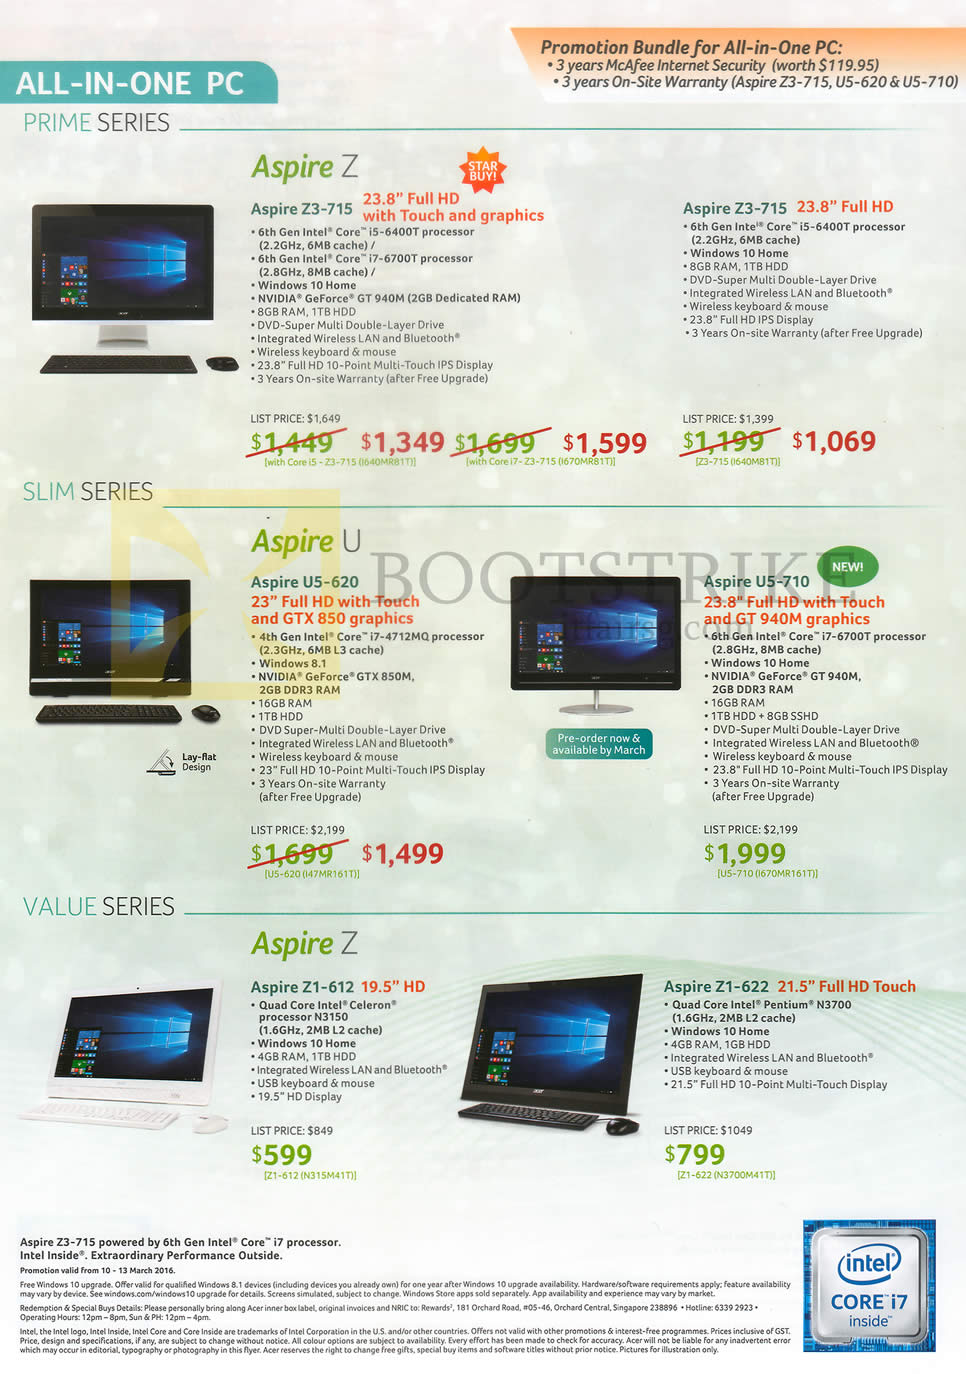 IT SHOW 2016 price list image brochure of Acer AIO Desktop PCs Prime, Slim, Value Series, Aspire Z, U, Z